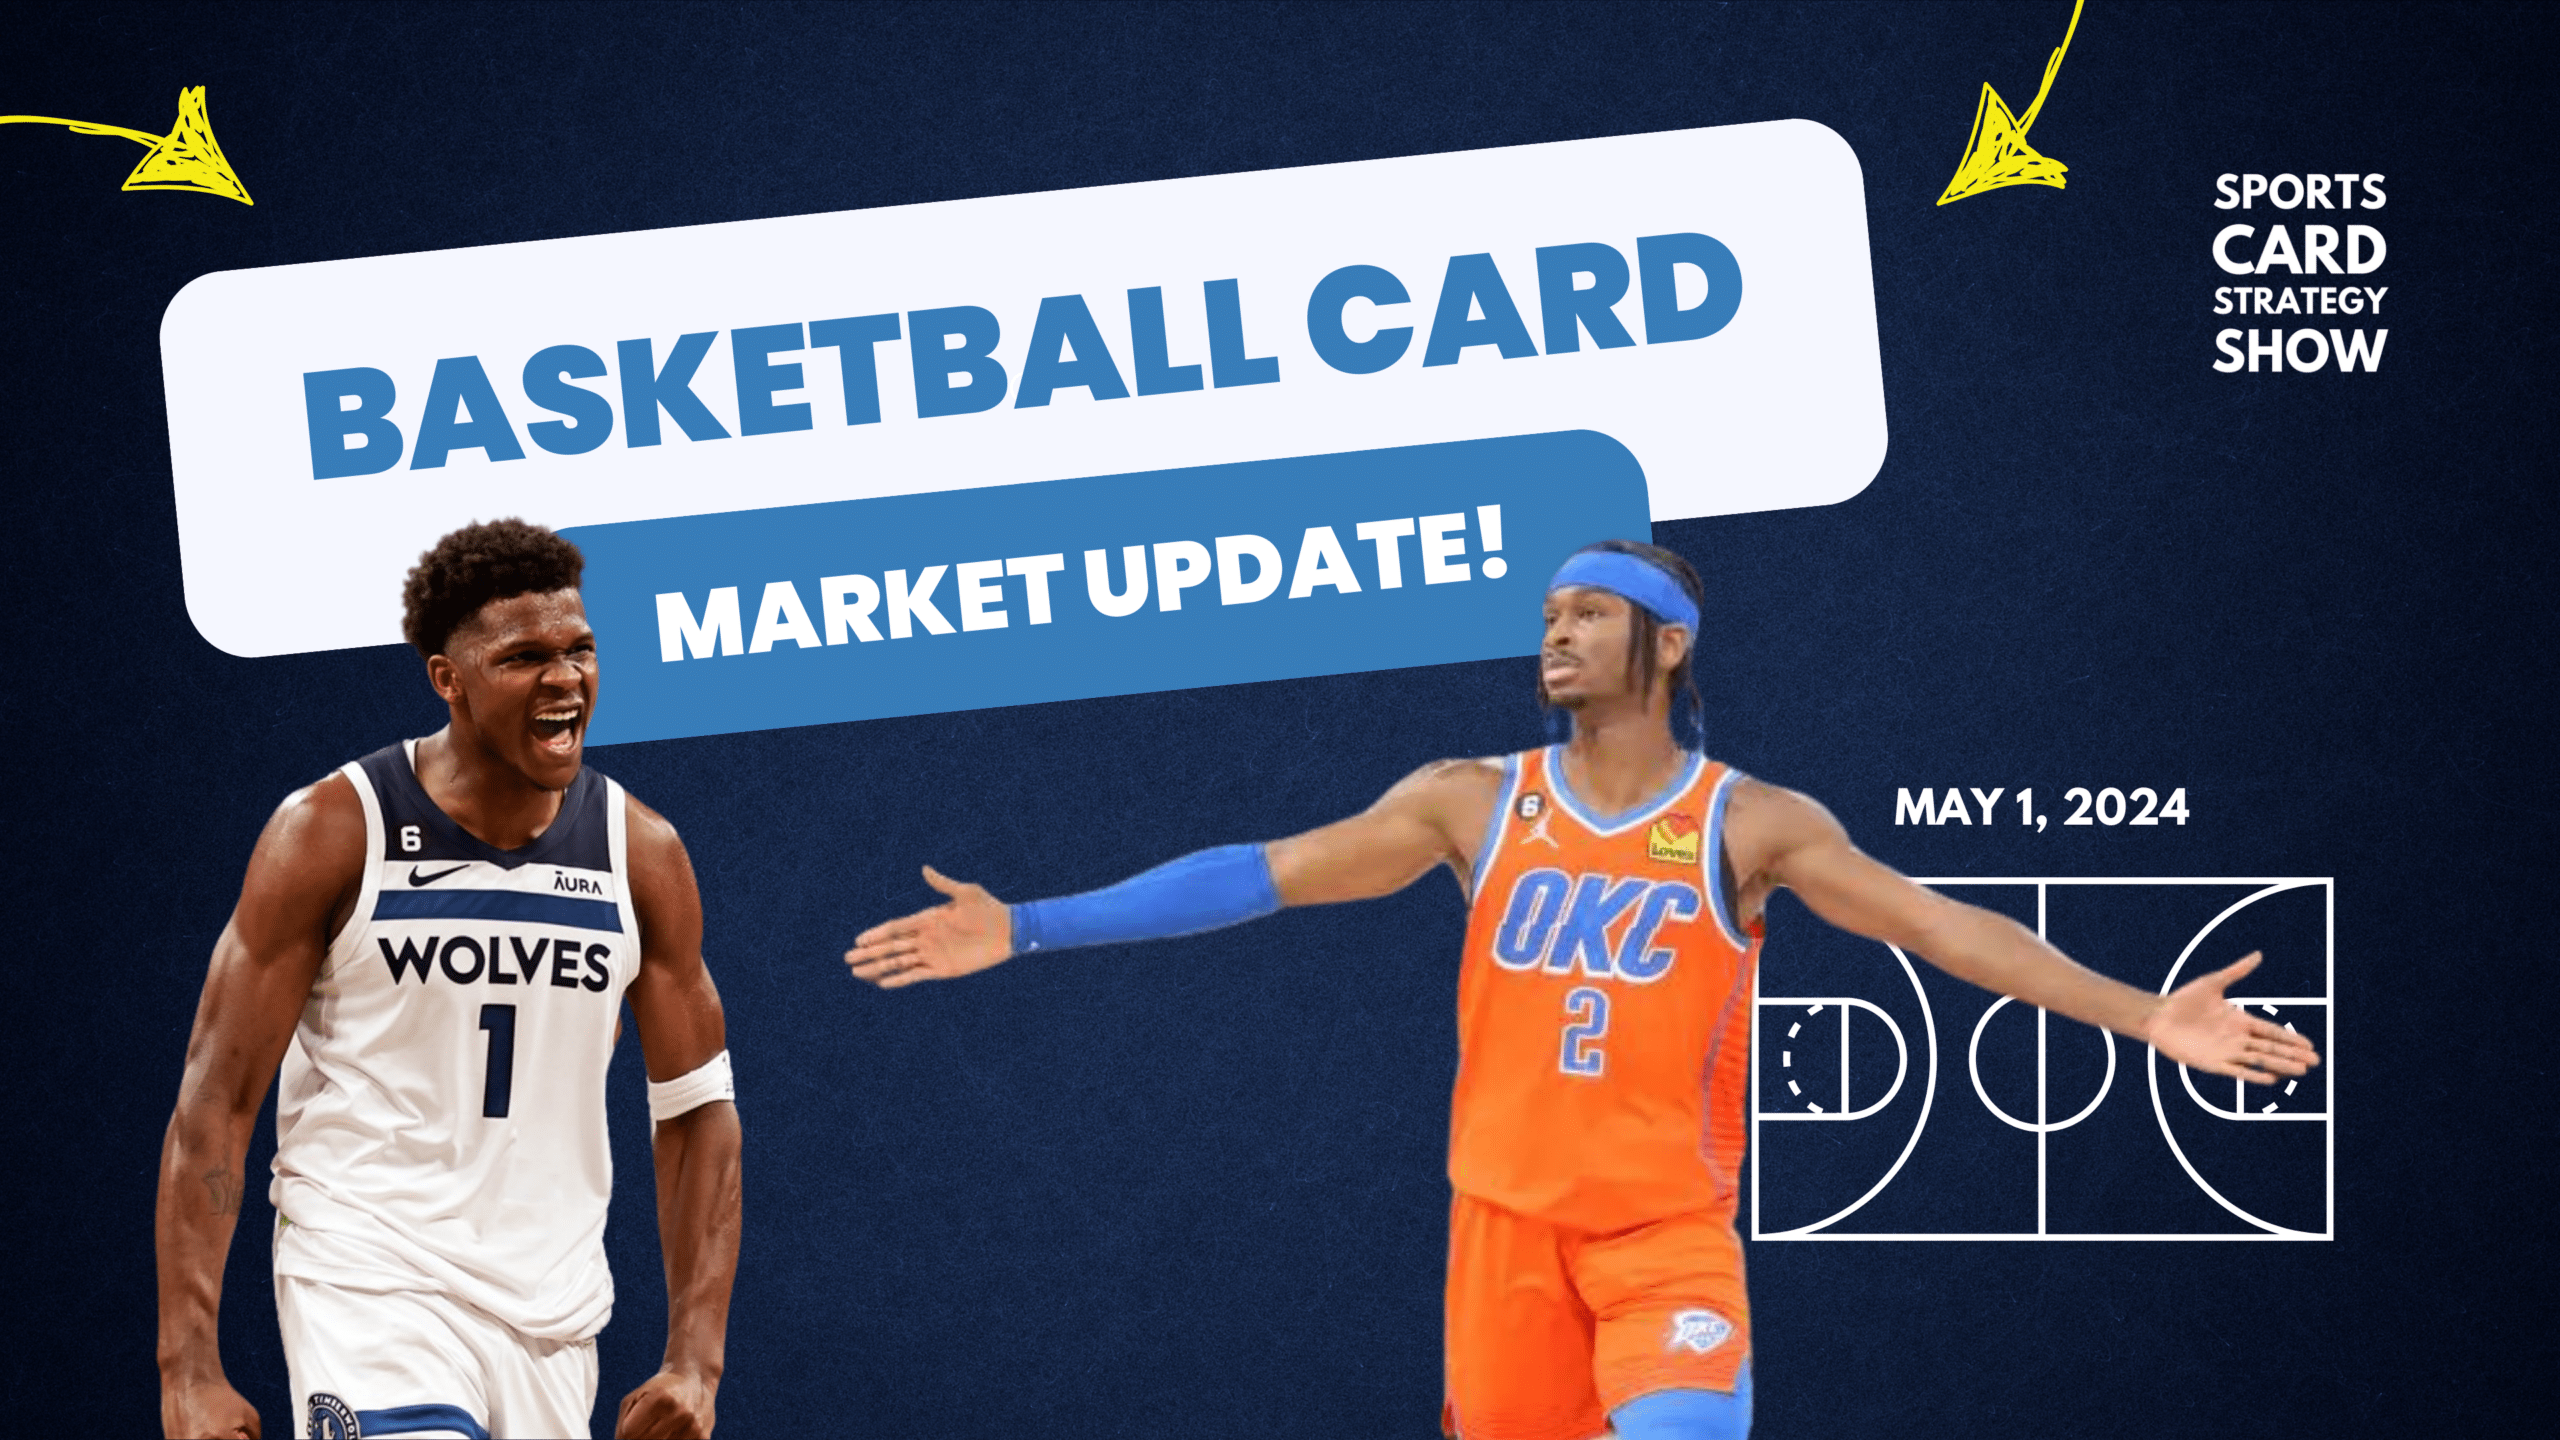 May 1 Basketball Card Market Update - Wednesday Basketball Show Thumbnail (1)